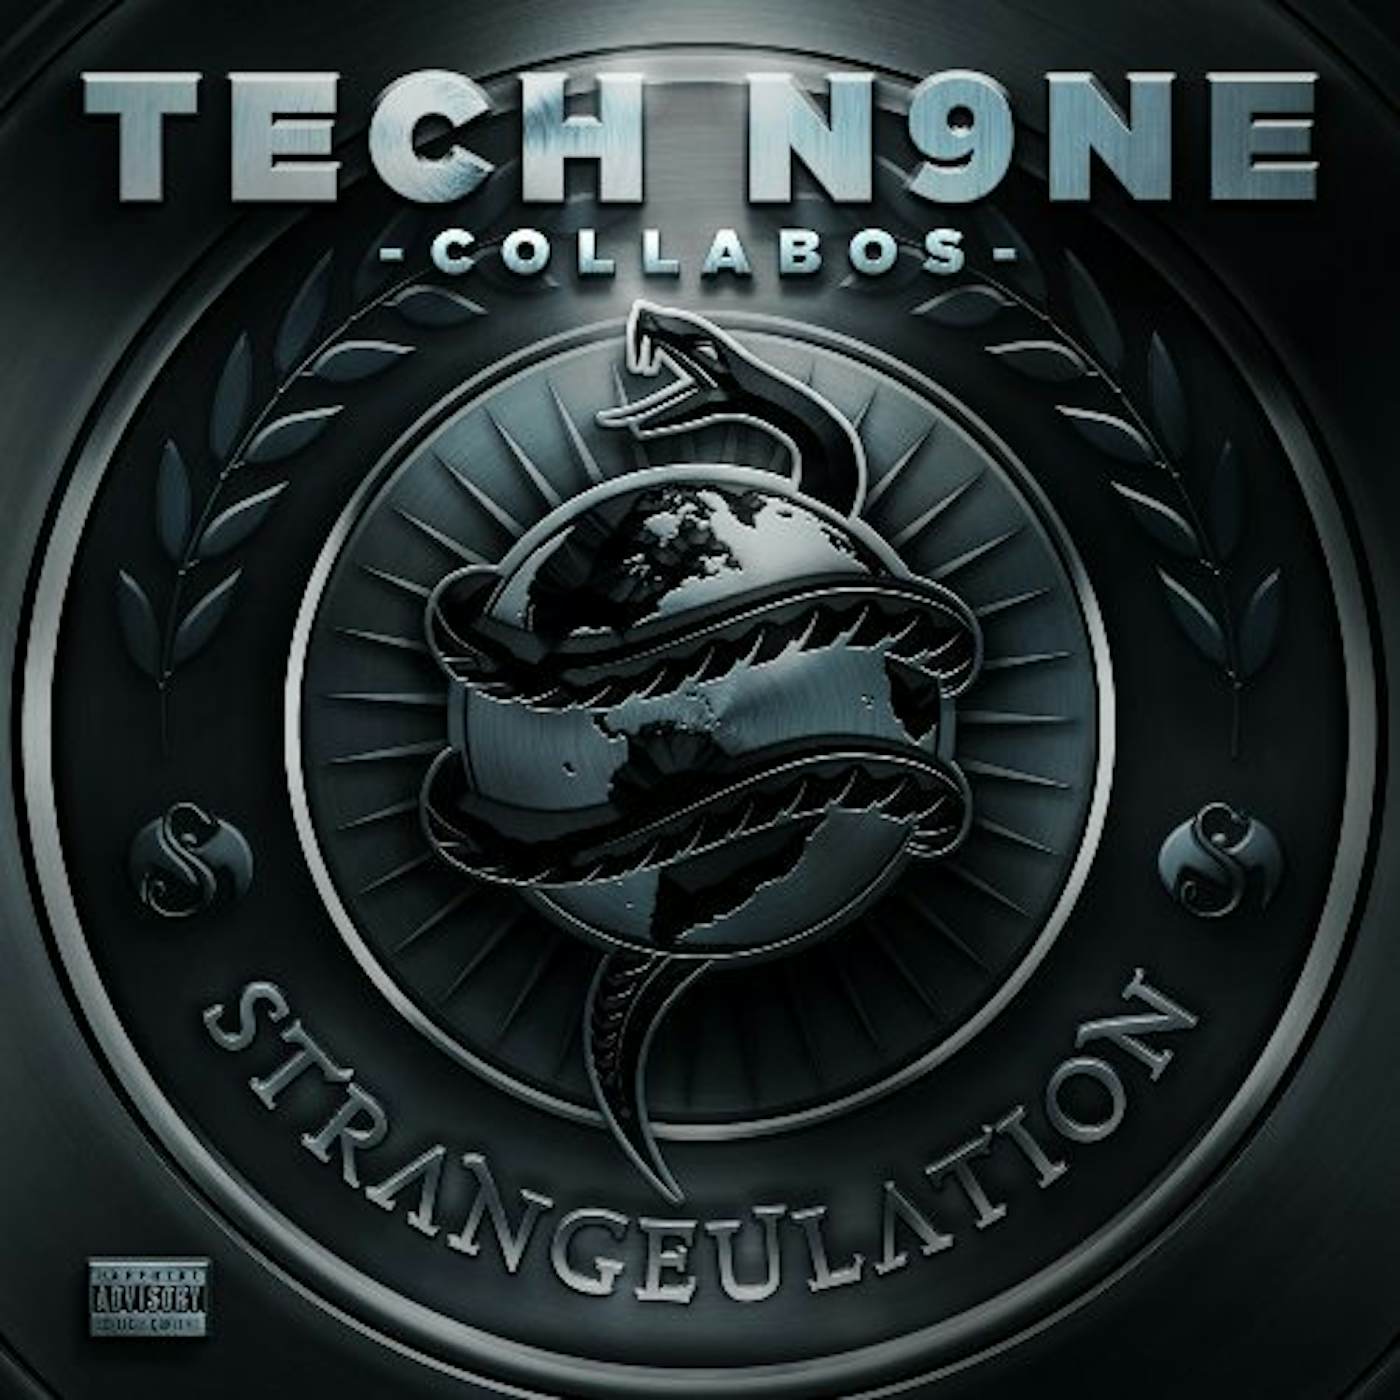 Tech N9ne Collabos Strangeulation Vinyl Record